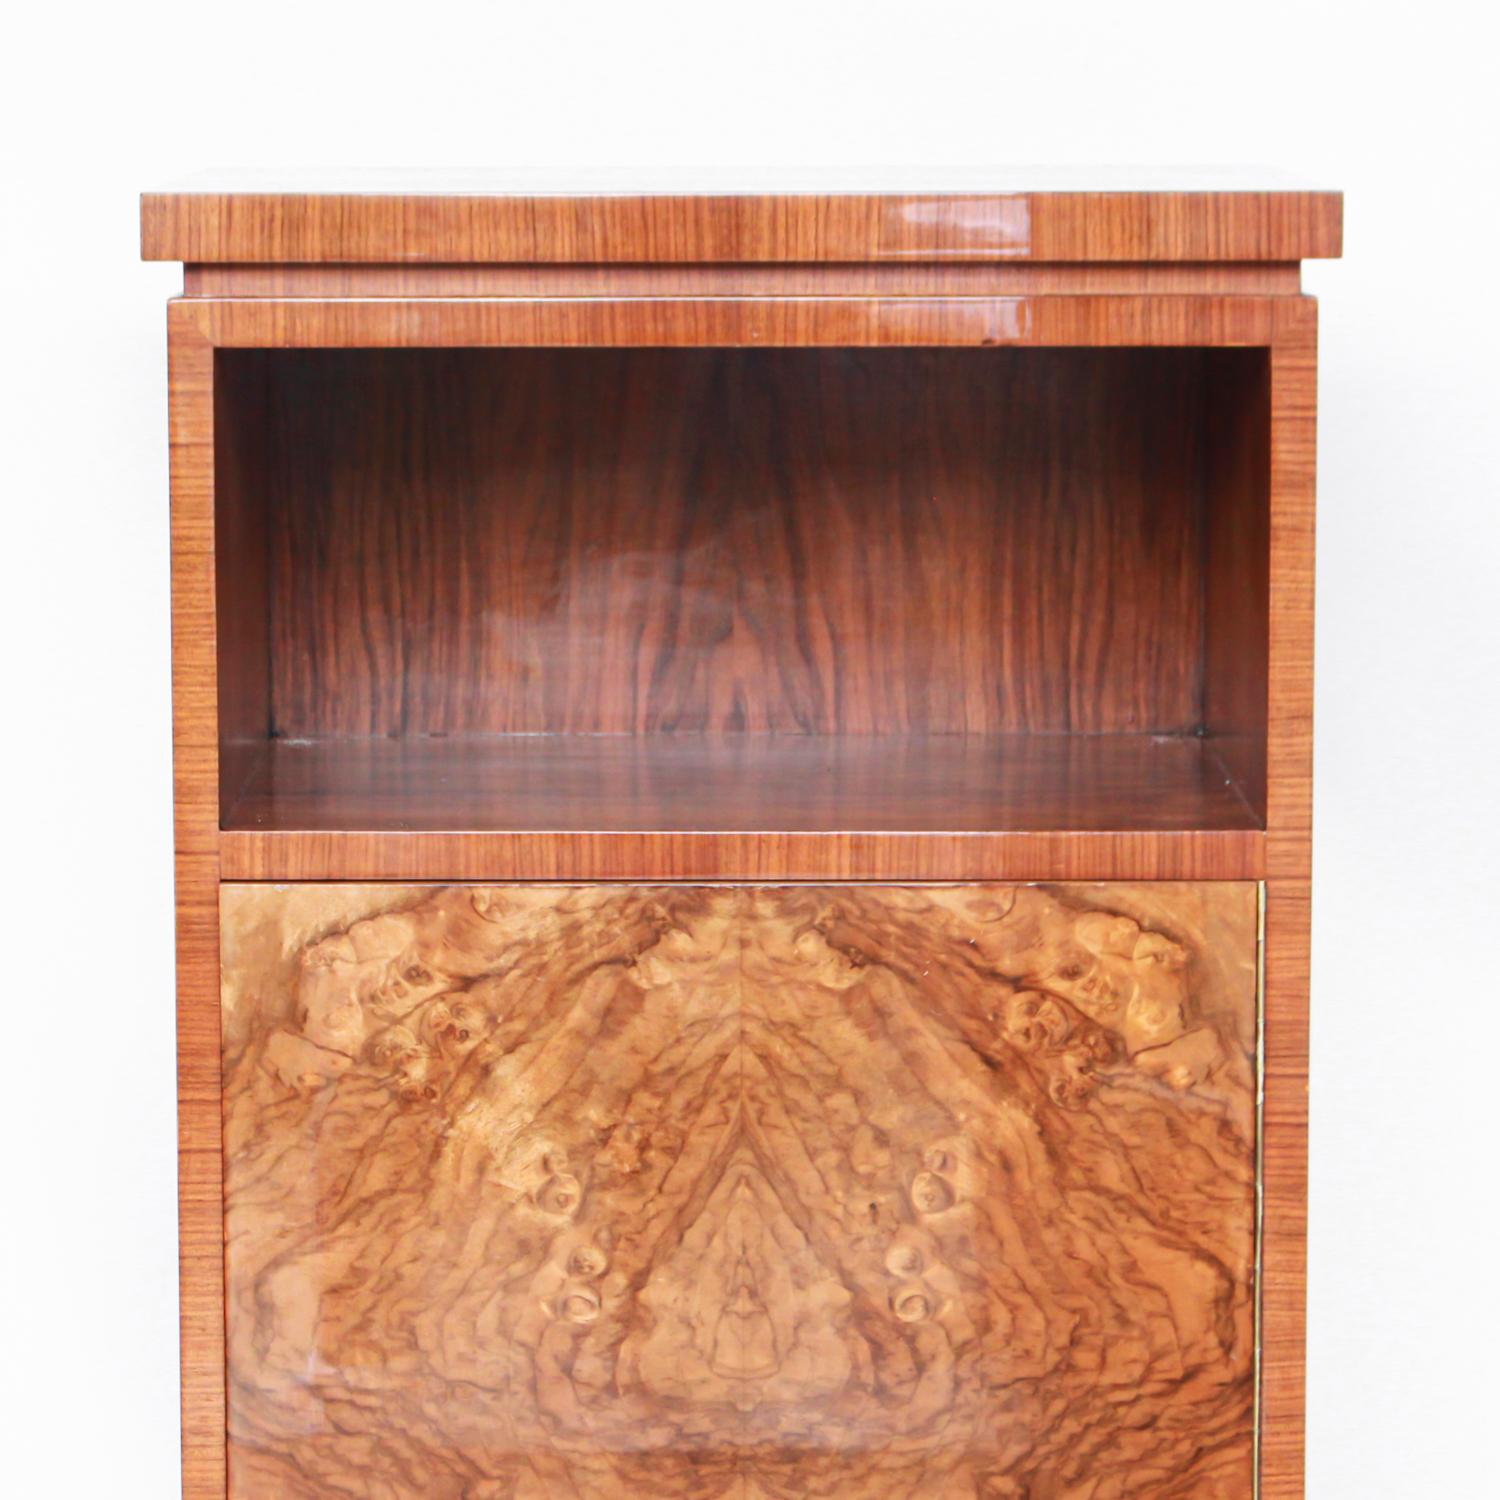 An Art Deco library cabinet. A small walnut veneered, single door cabinet on bracket feet. Open bookshelf to top. Walnut sliding trays to interior.

Dimensions: H 110cm, W 48cm, D 36cm

Origin: English

Date: circa 1930

Item no: 2609193.